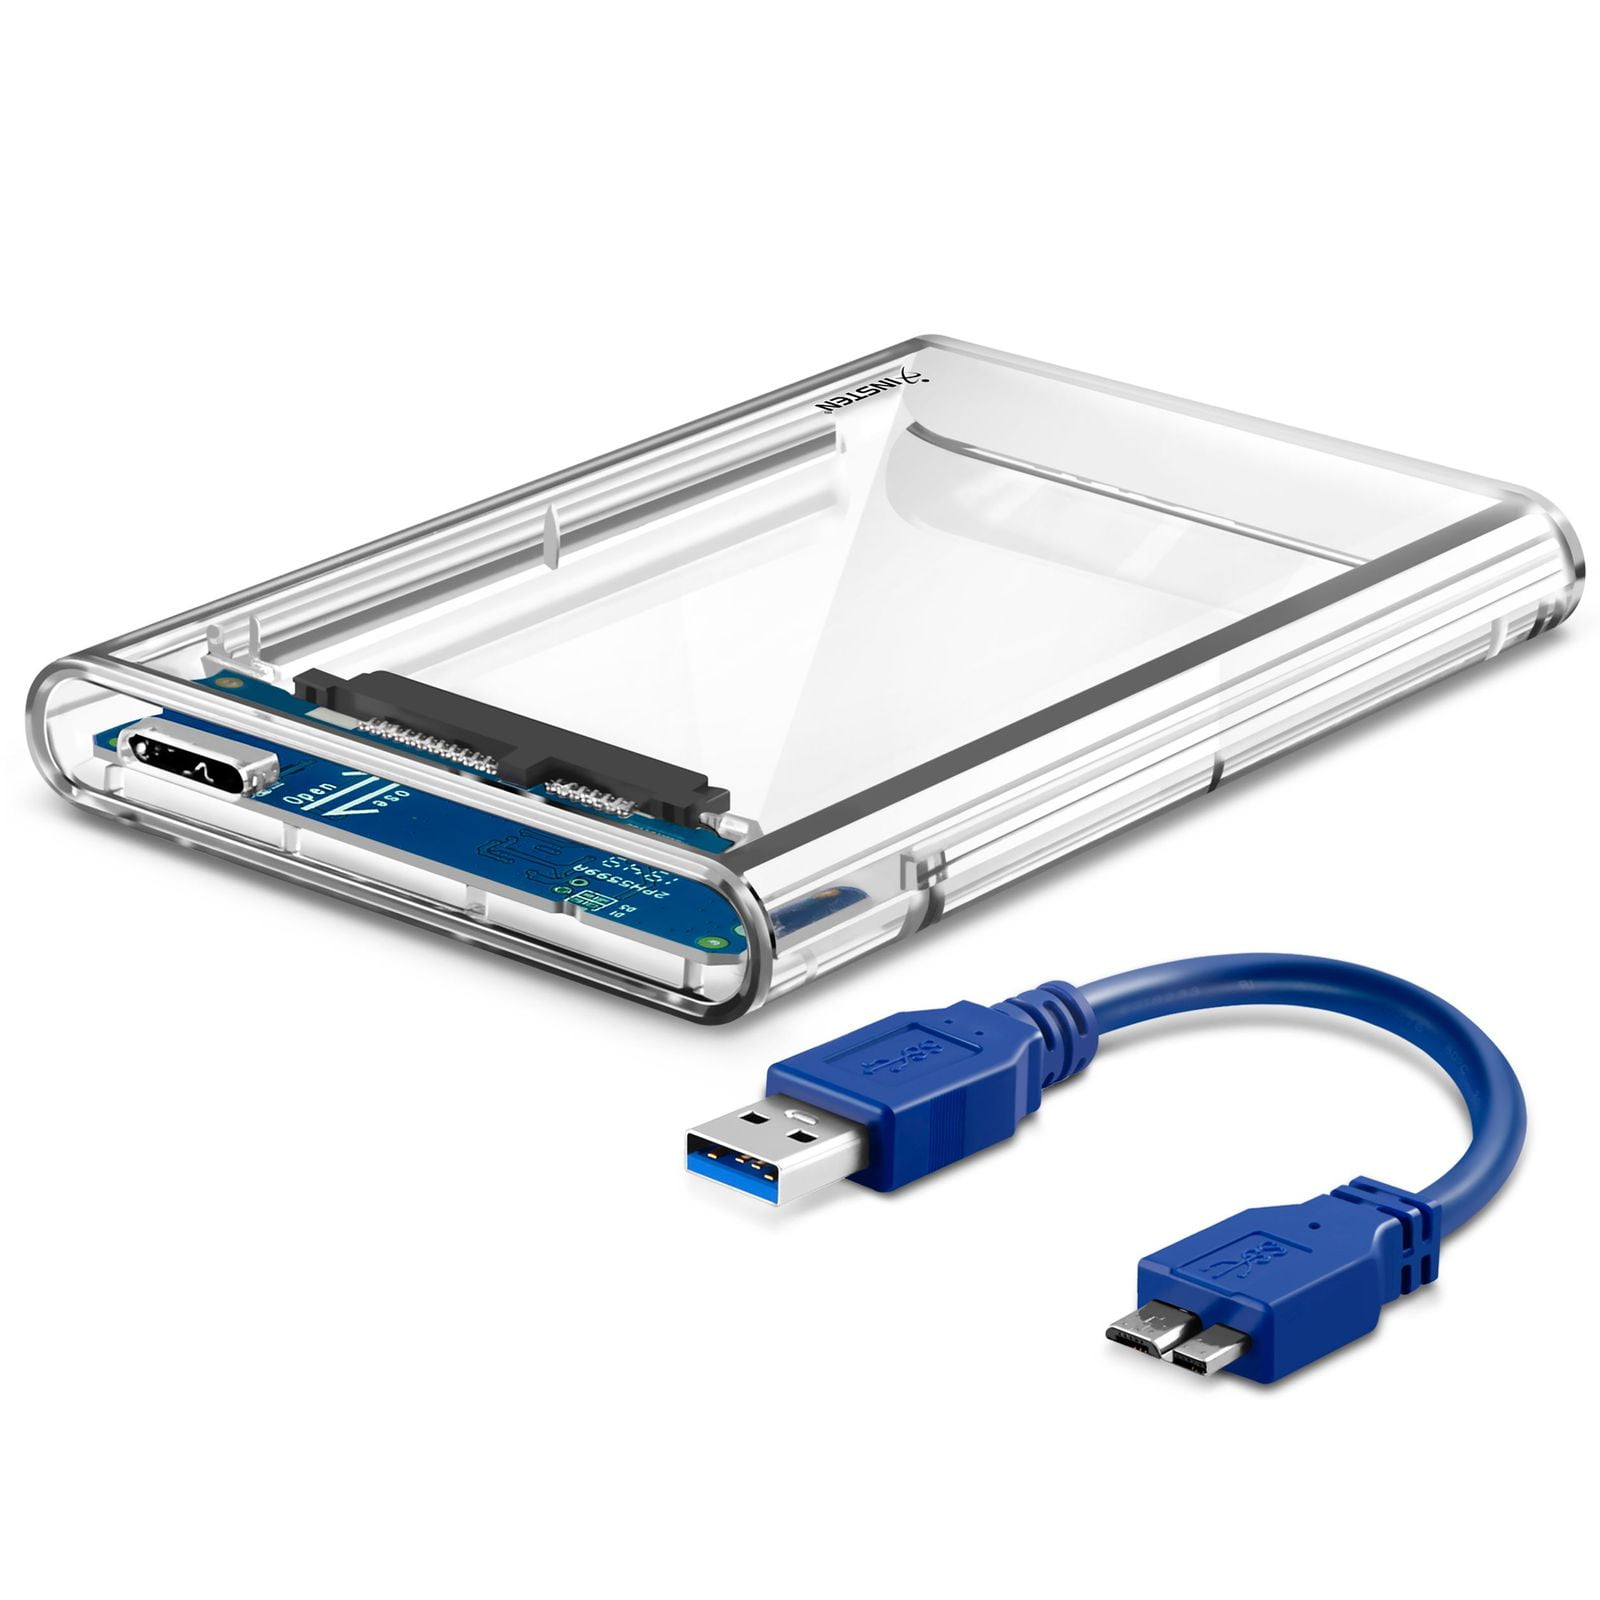 HDD Enclosure 2.5" Inch Sata USB 3.0 Hard Drive HDD Case External Laptop